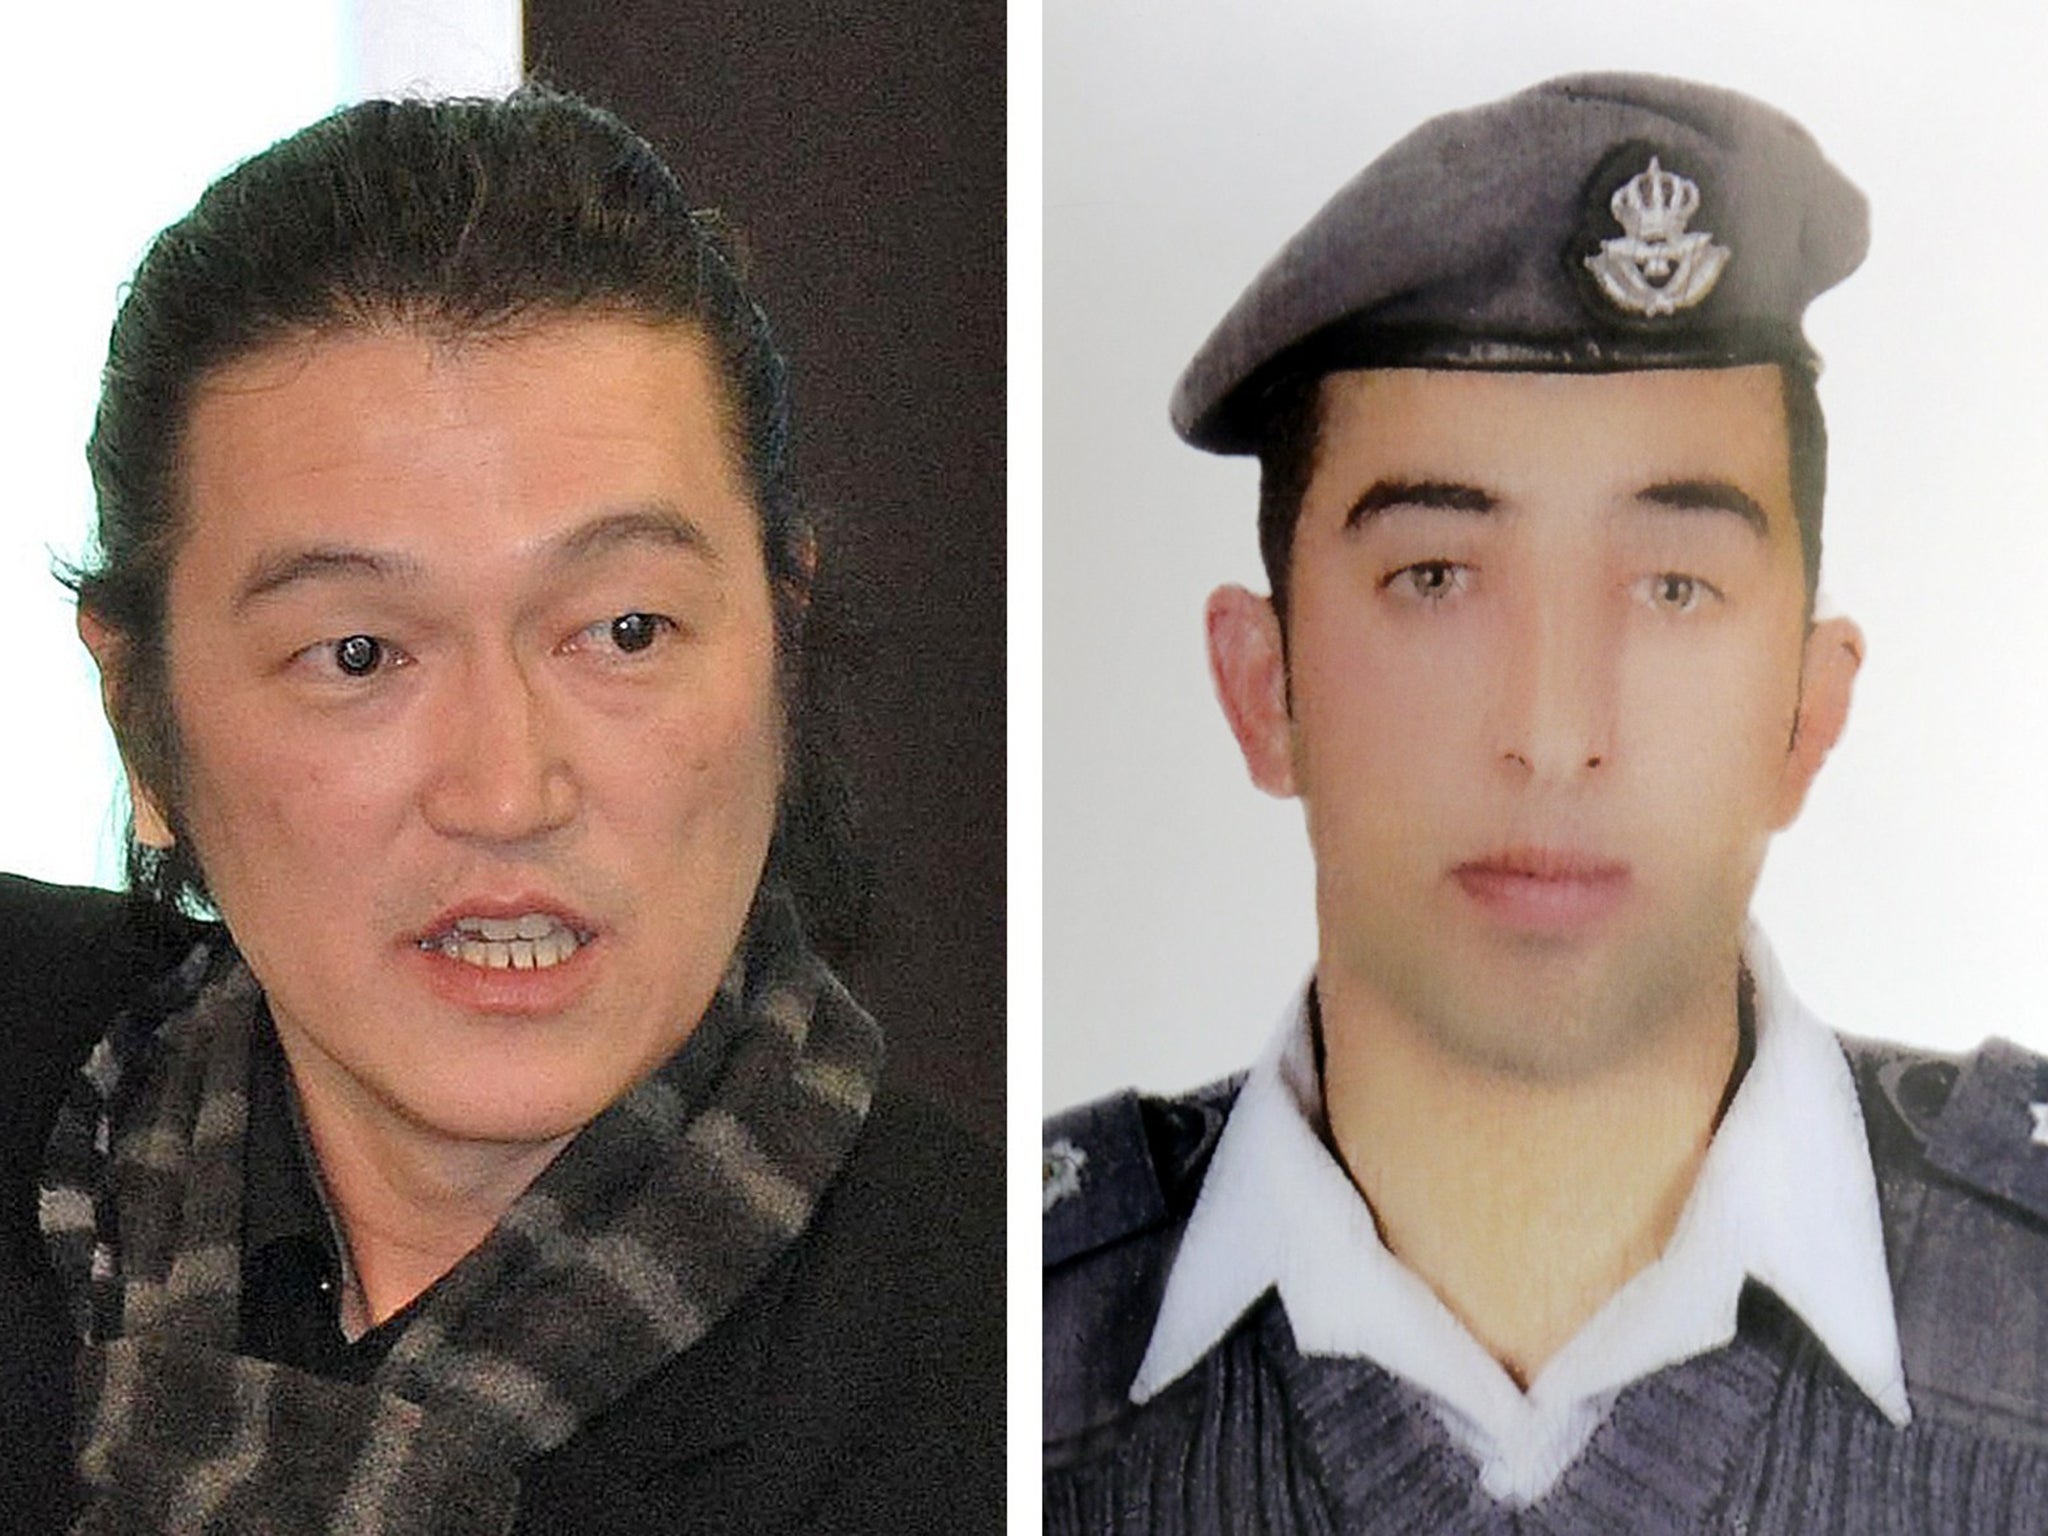 Japanese journalist Kenji Goto (left) and Jordanian pilot Maaz al-Kassasbeh, who were both captured by Islamic State jihadist group in Syria